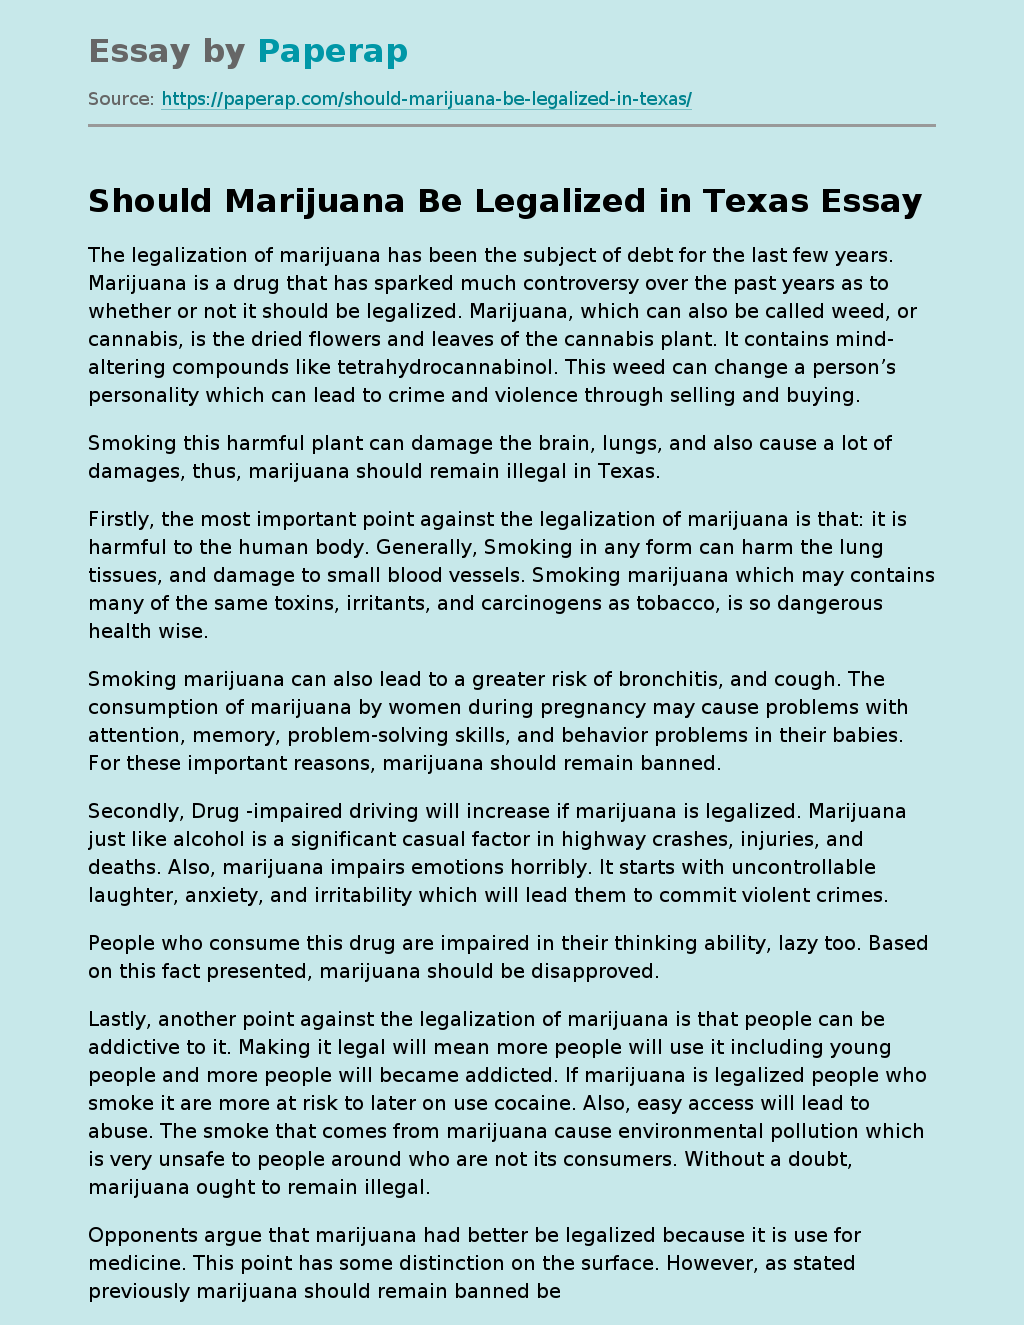 Should Marijuana Be Legalized in Texas